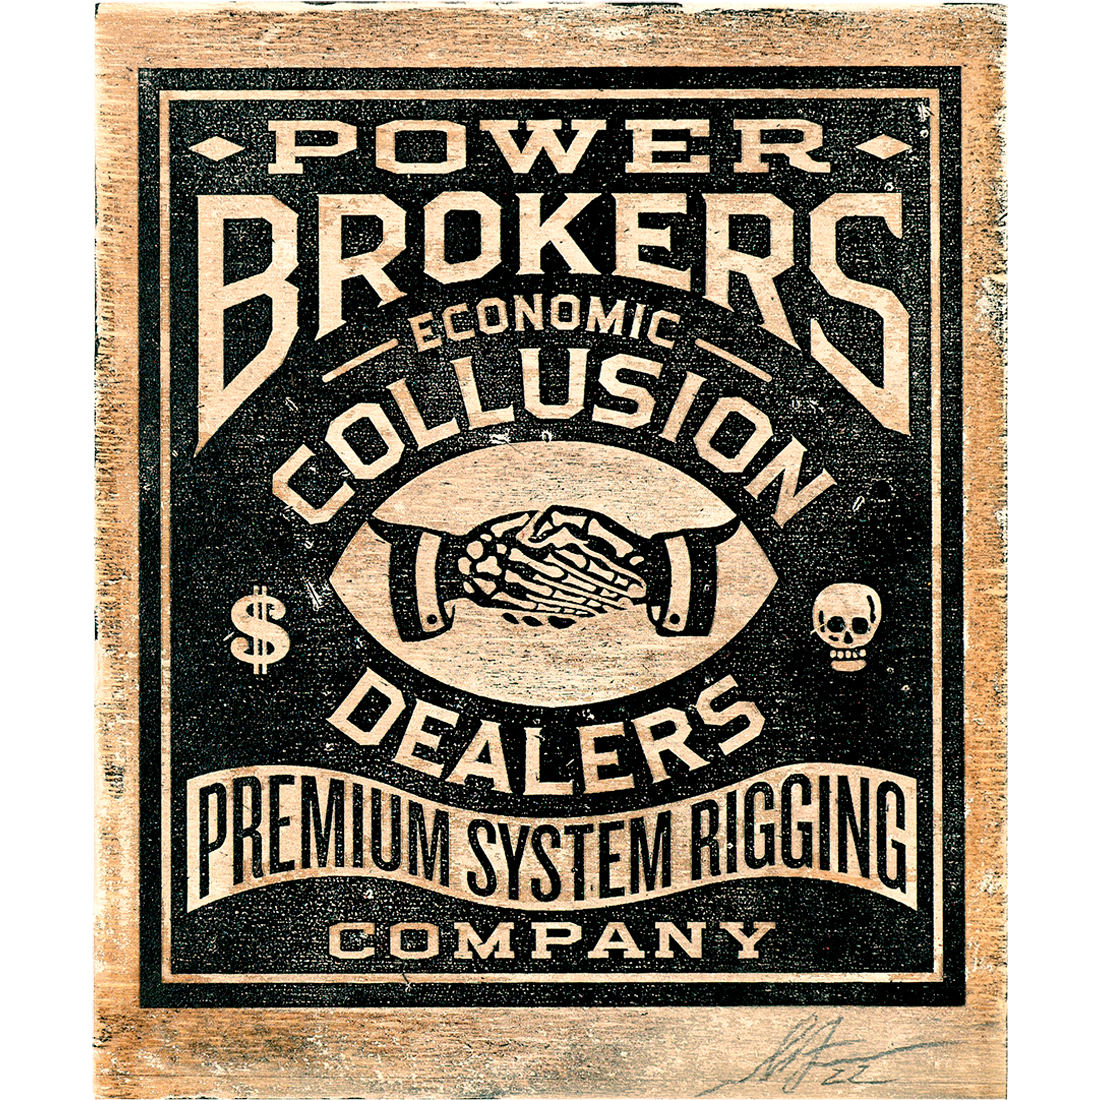 Power Brokers (Cream)